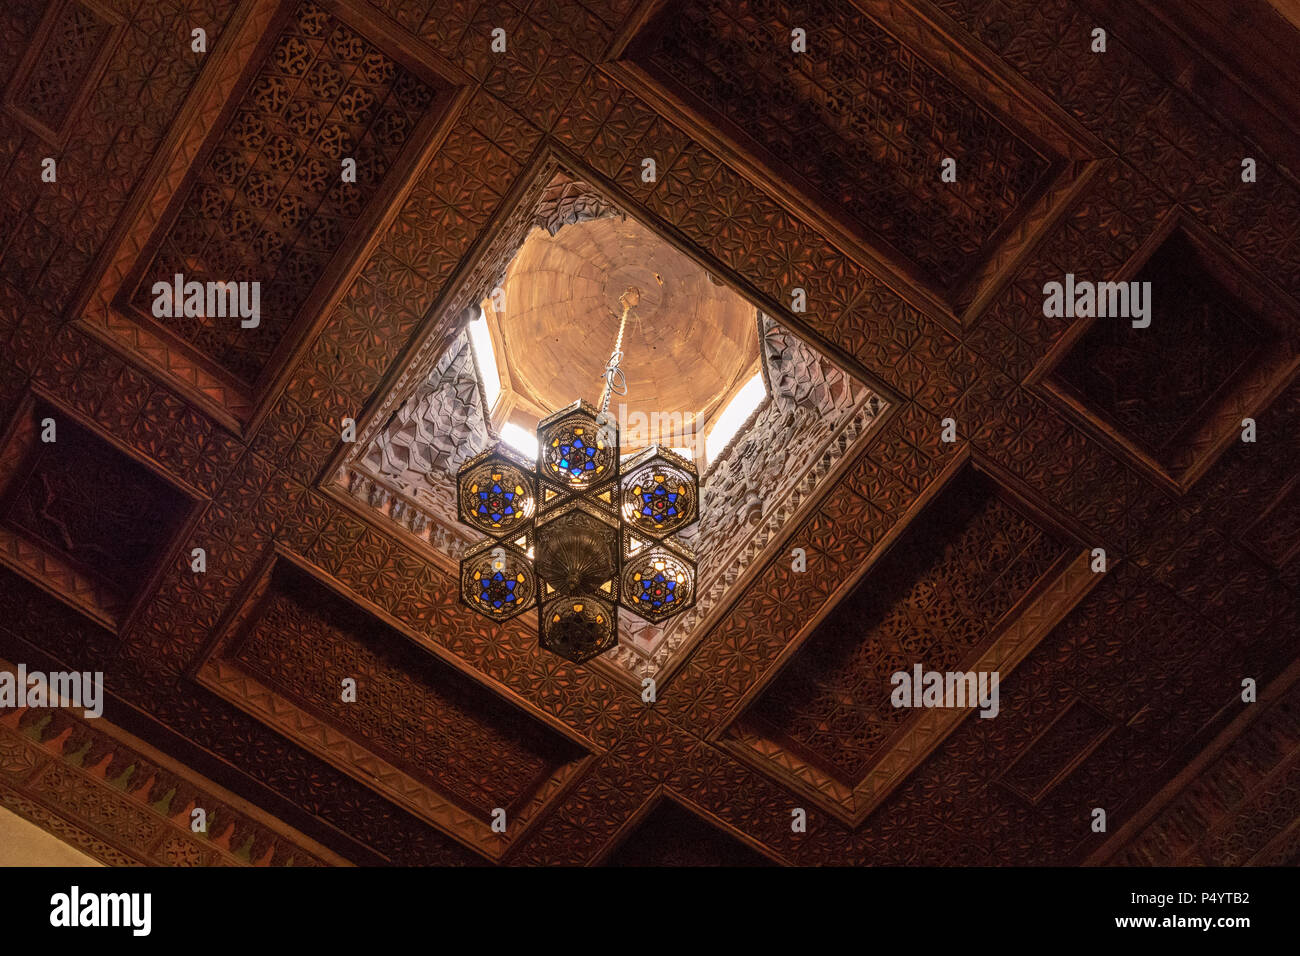 detail of carved wooden skylight, Bayt al-Sinnari palace, Cairo, Egypt Stock Photo